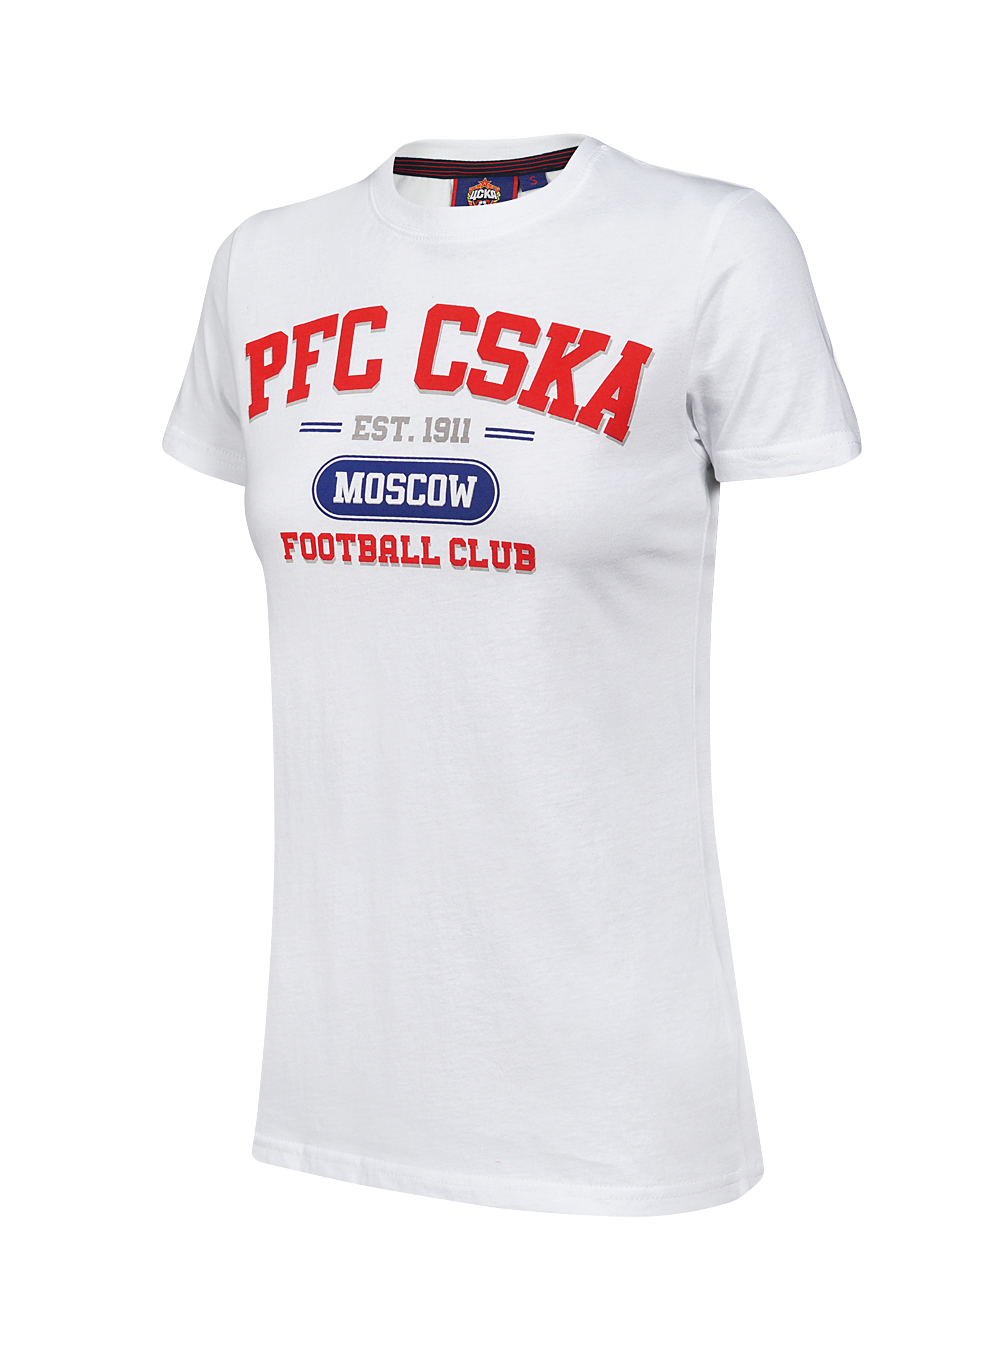 Футболка женская PFC CSKA Moscow белая (XXXL)